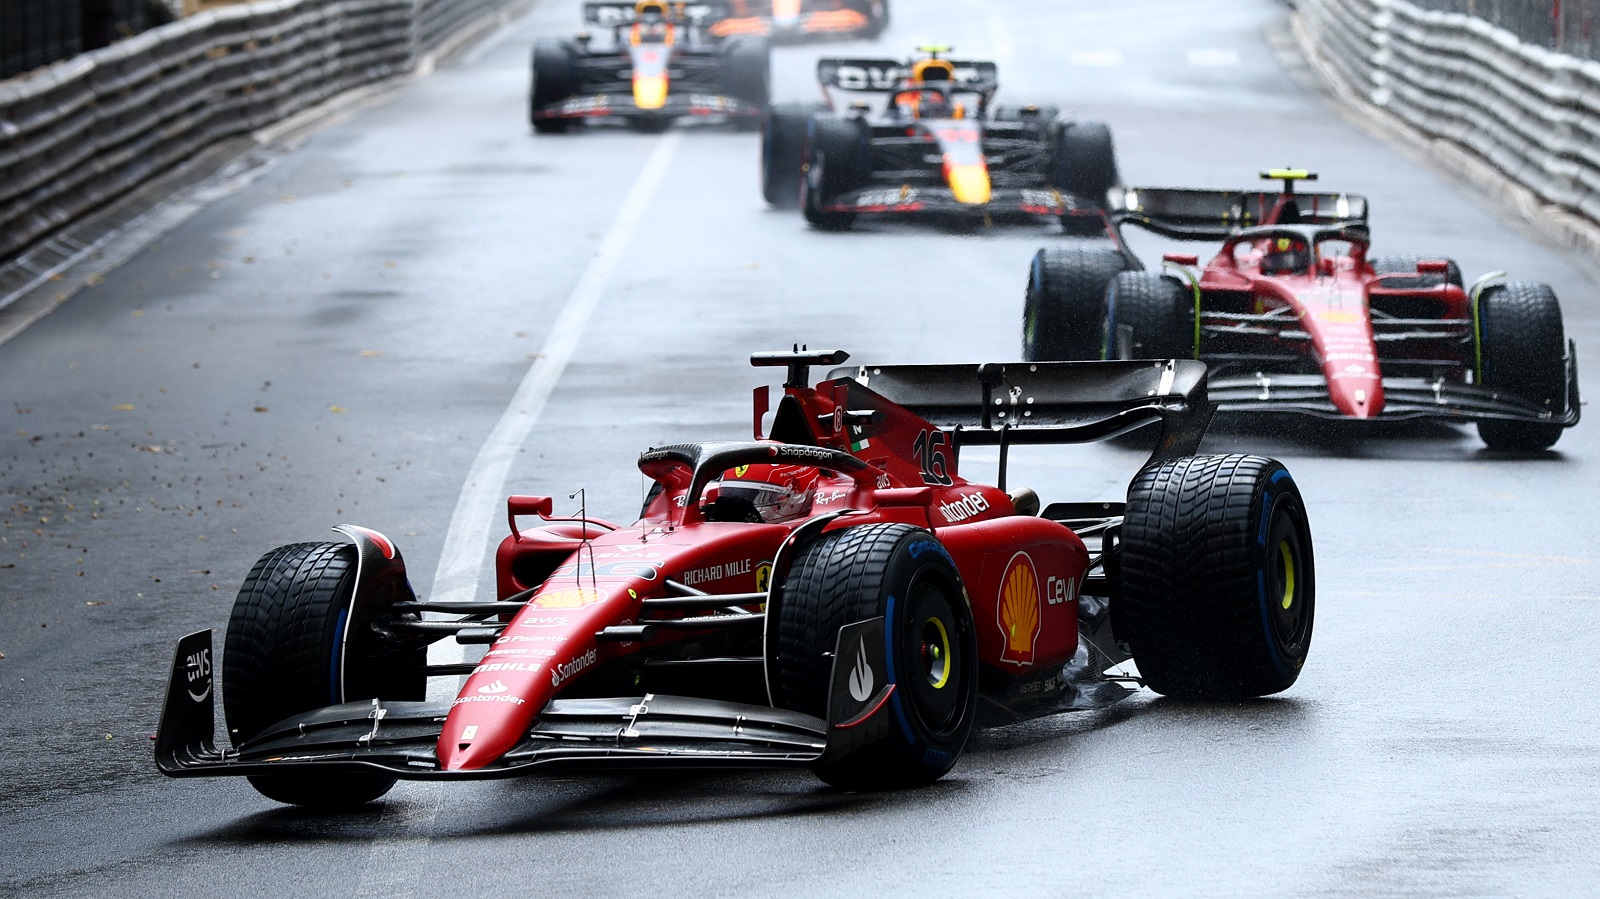 Charles Leclerc leads Carlos Sainz during the Formula 1 Grand Prix of Monaco at Circuit de Monaco on May 29, 2022.